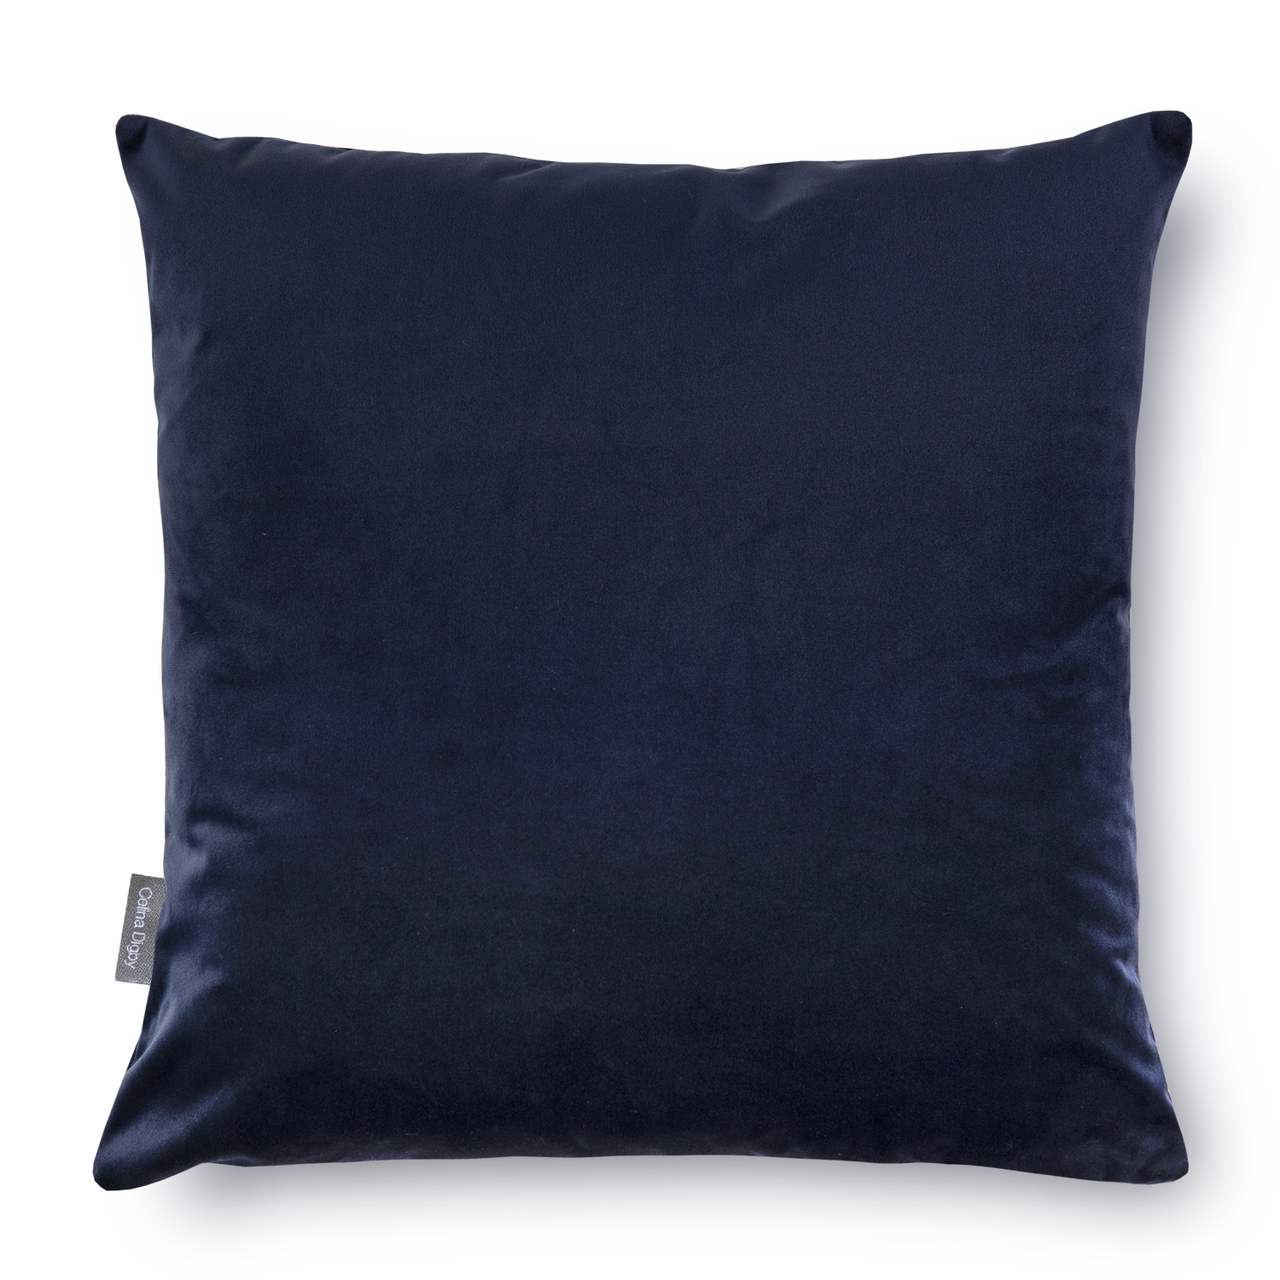 Celina Digby Luxury Opulent Super Soft Velvet Cushion – Dark Navy Available in 2 Sizes Standard (45cm x 45cm) Hollow Fibre Filling